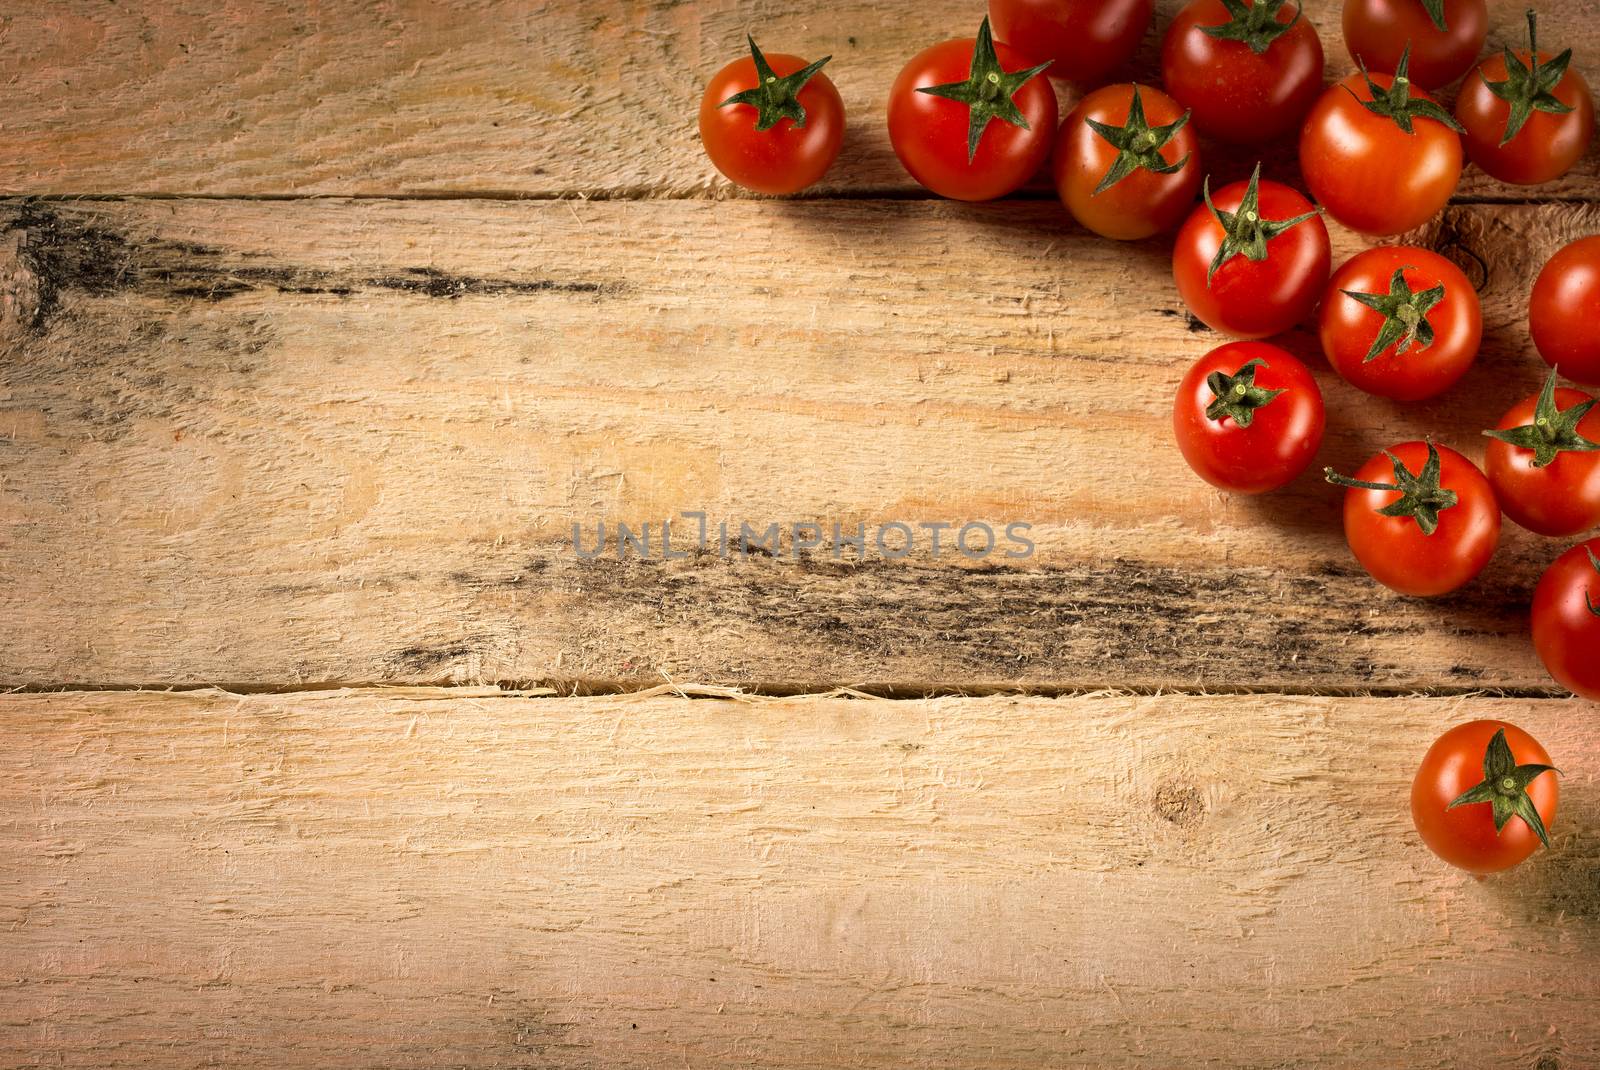 cherry tomatoes on wood background by dolgachov